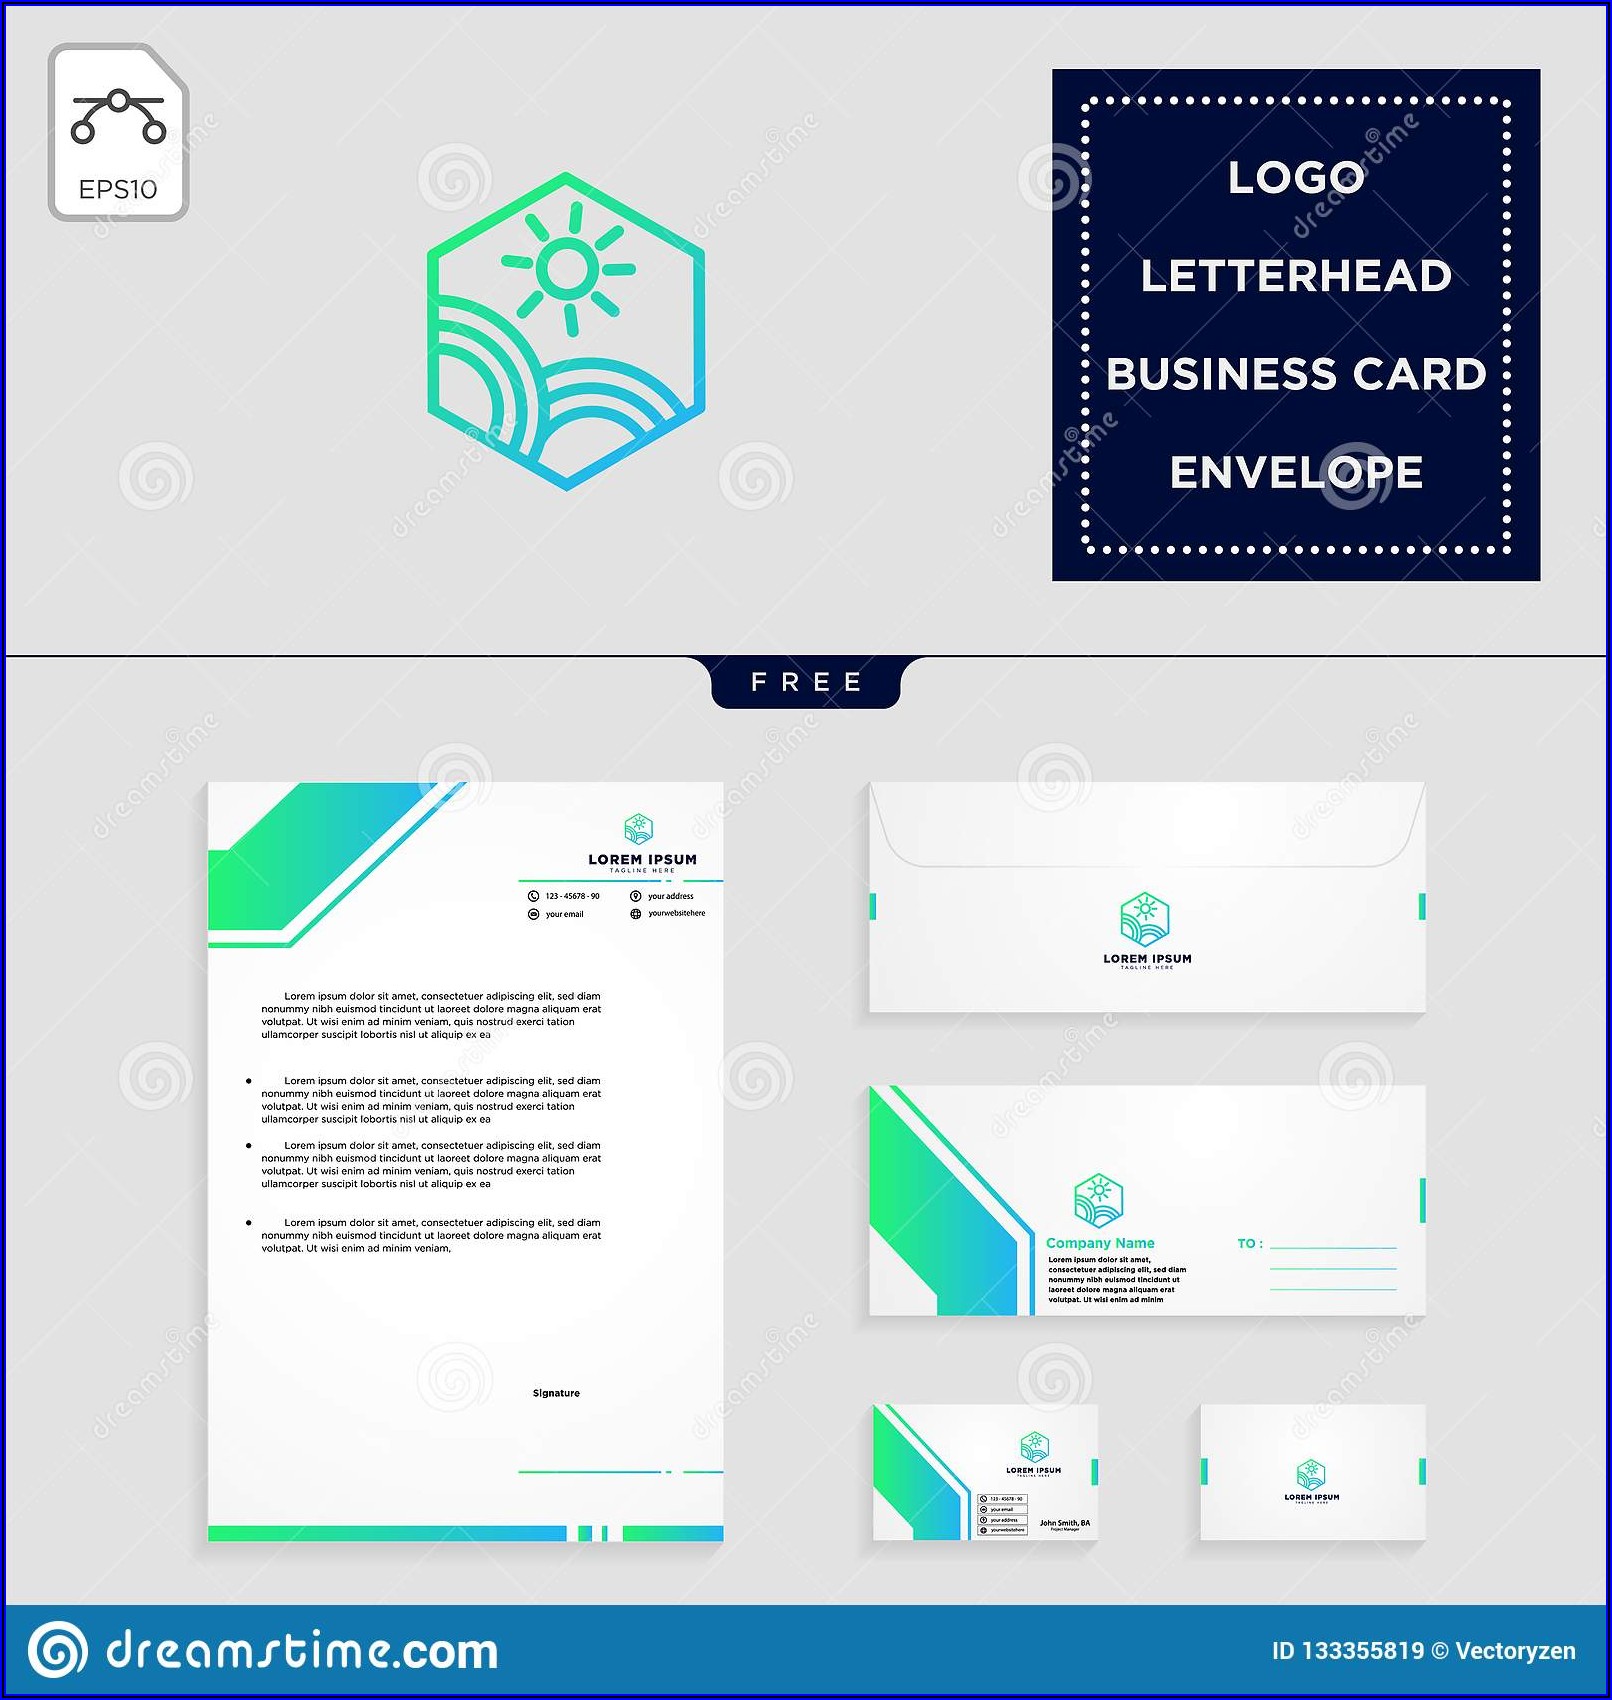 Free Business Card Letterhead Envelope Template